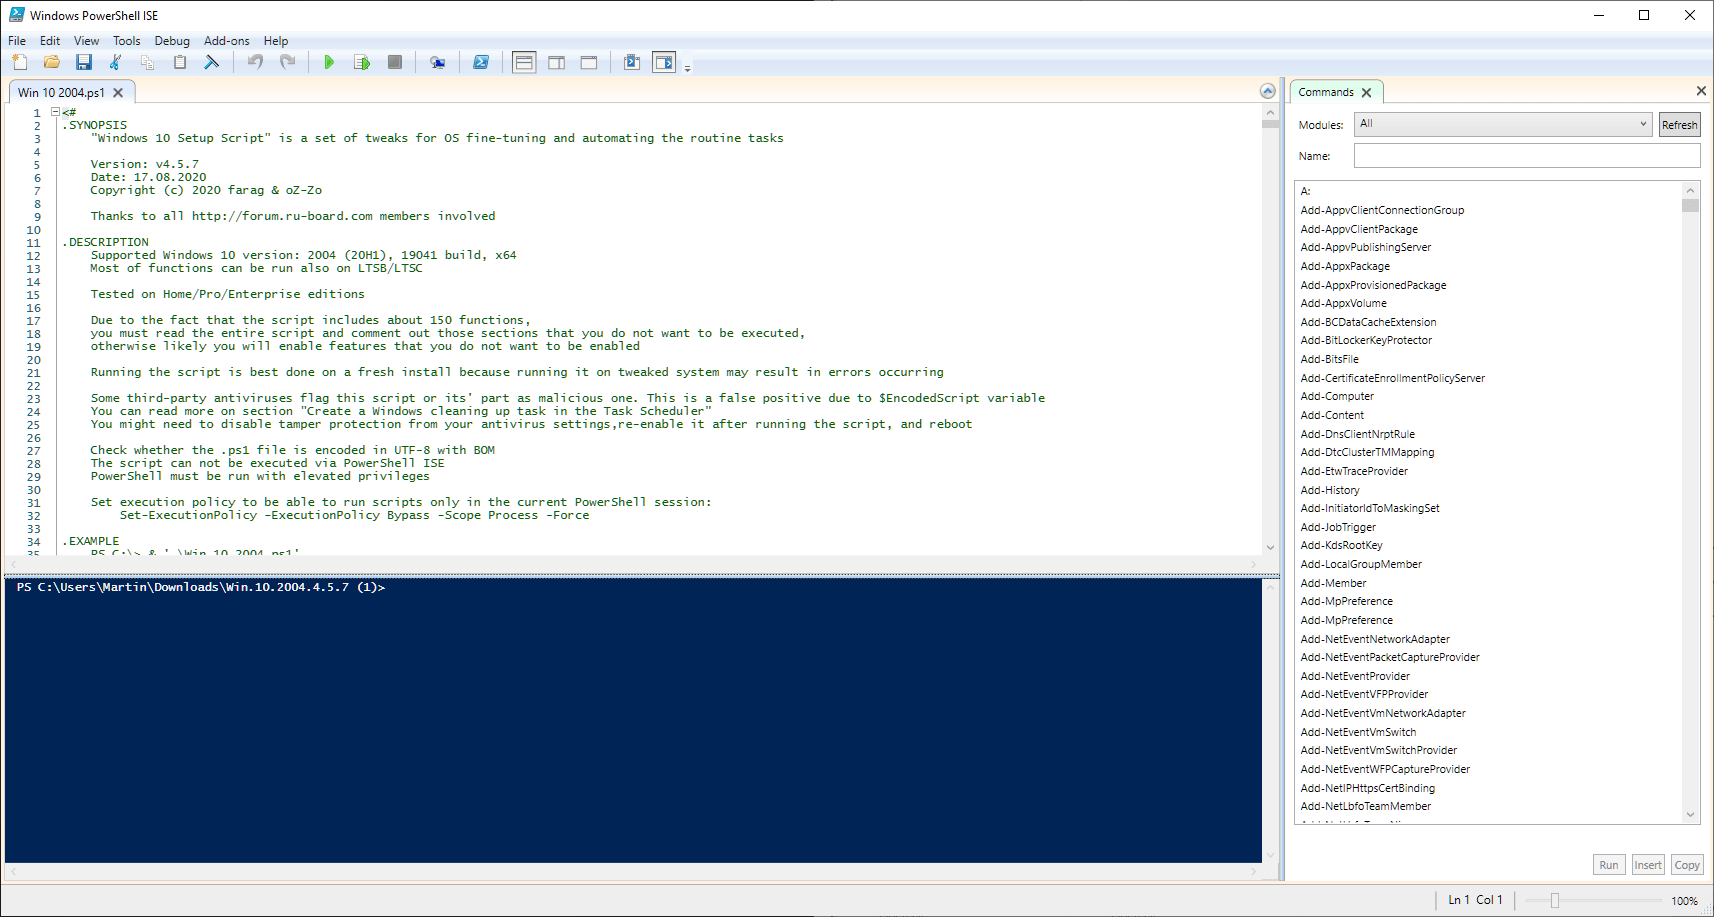 Run Windows 10 Setup Script after installation to customize the OS